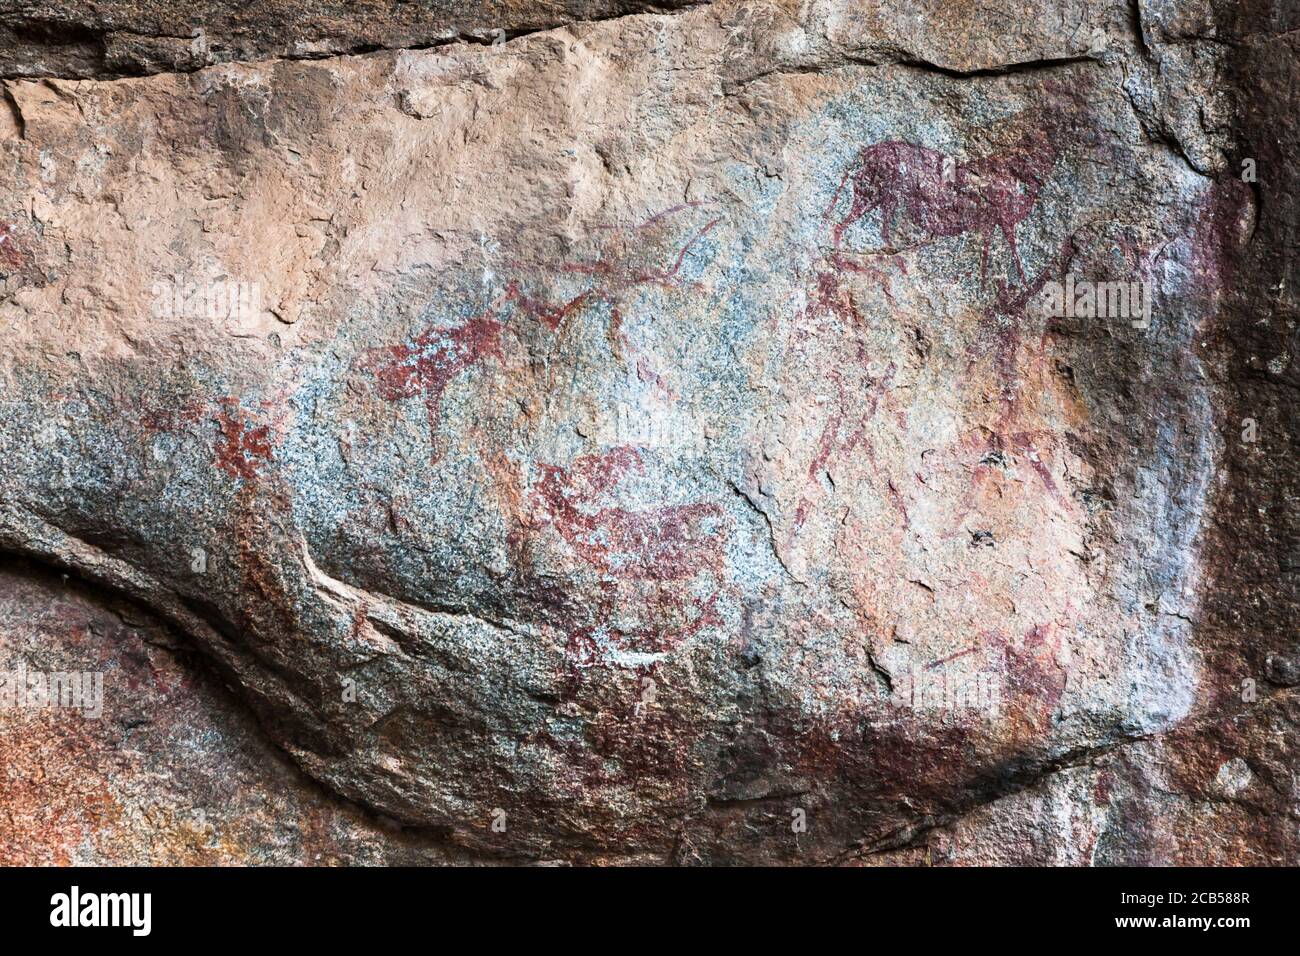 Matobo hills, 'Pomongwe cave' rock painting site, rock art, Matobo National Park, suburbs of Bulawayo, Matabeleland South, Zimbabwe, Africa Stock Photo